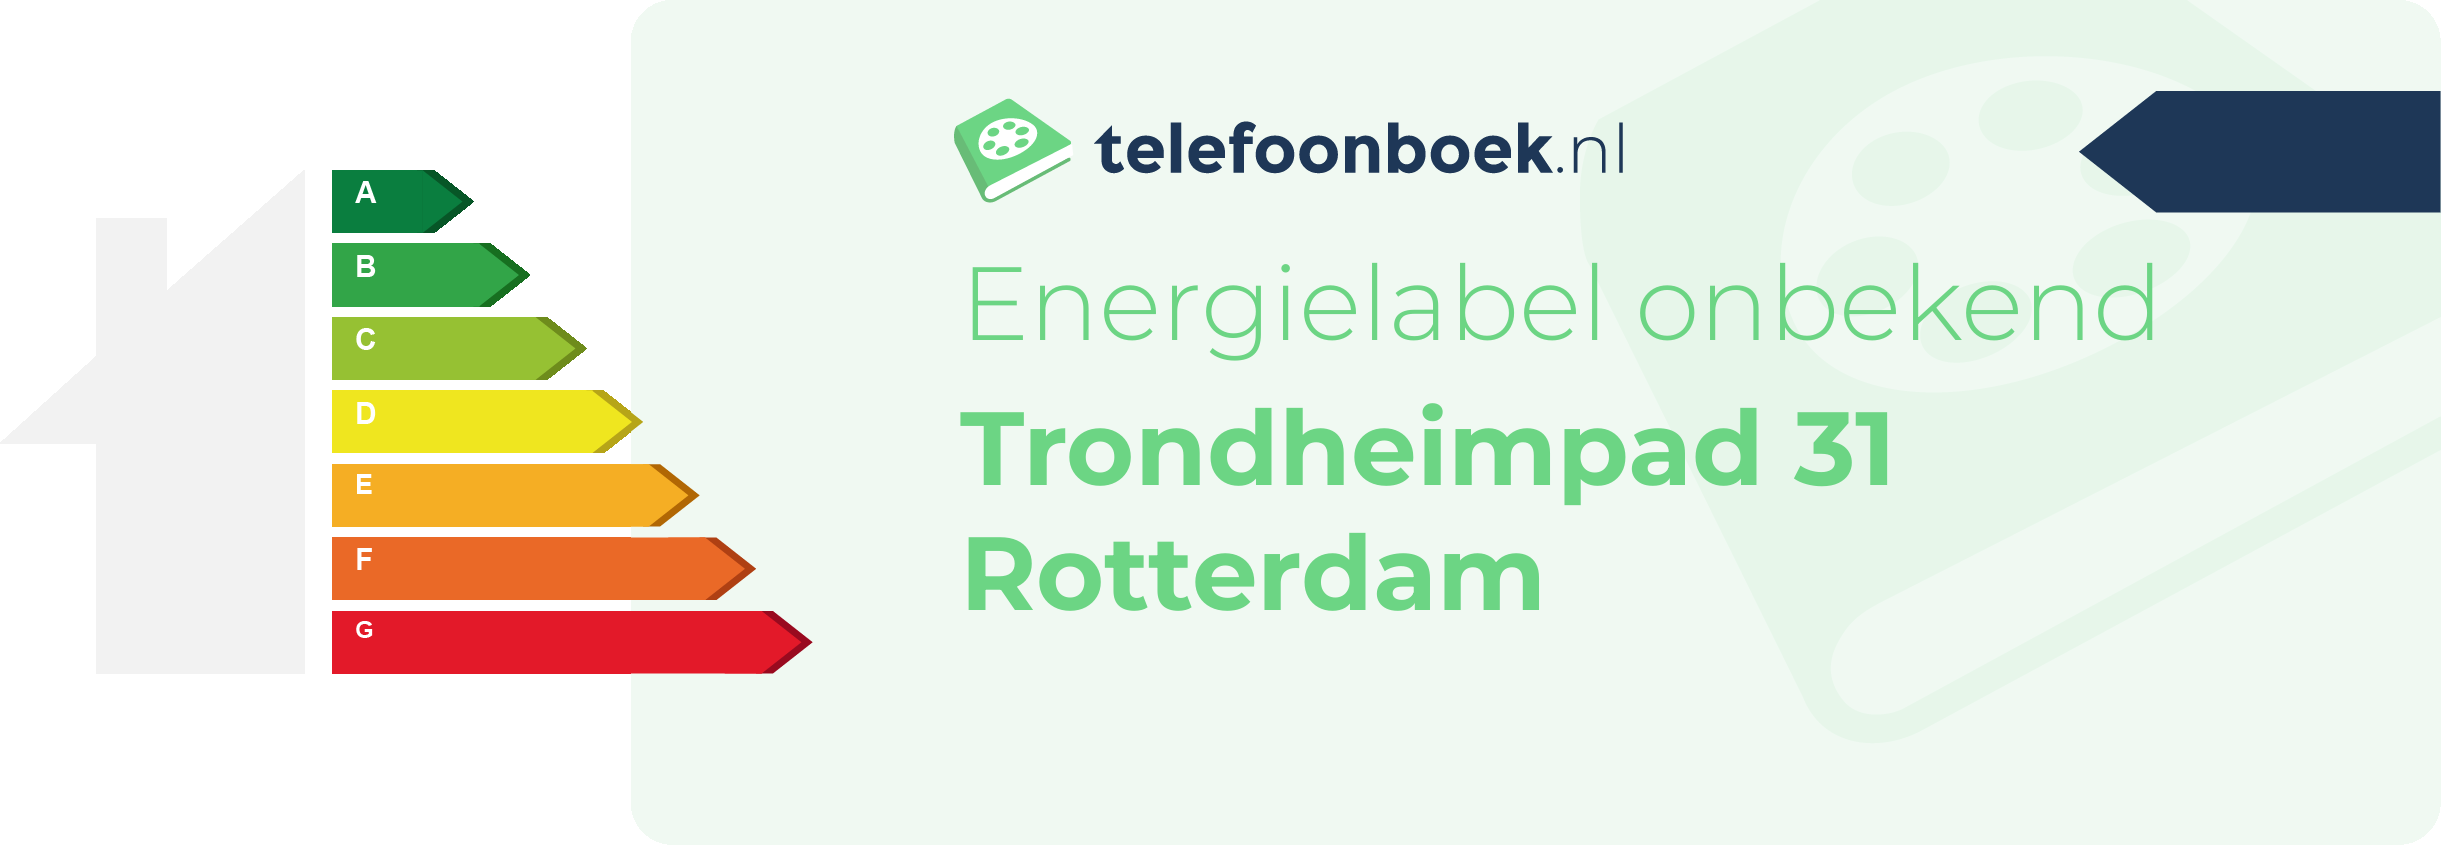 Energielabel Trondheimpad 31 Rotterdam